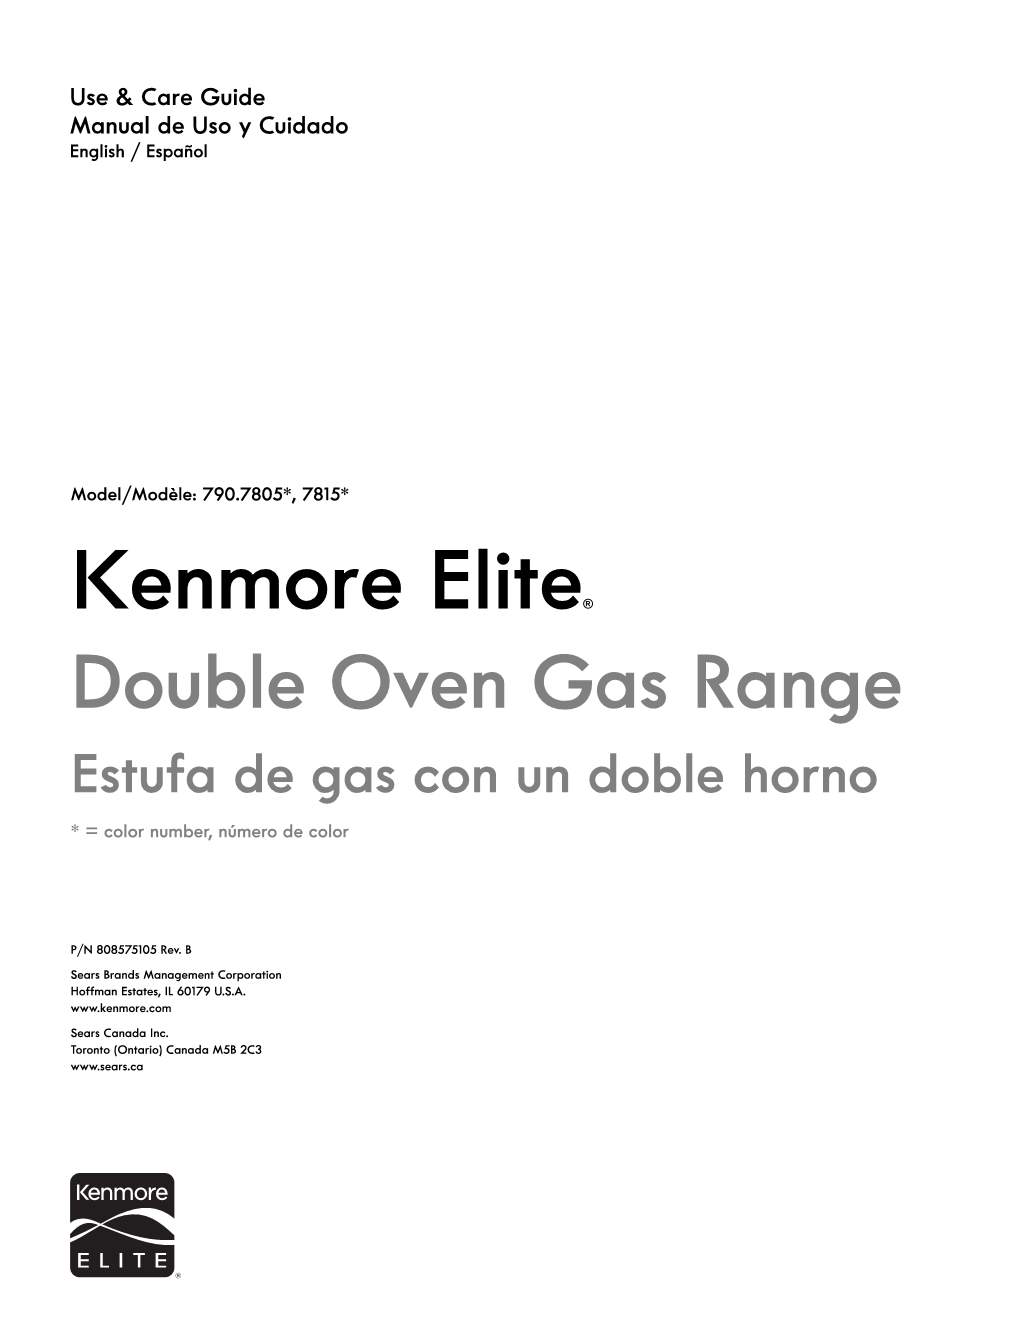 Kenmore Elite® Double Oven Gas Range Estufa De Gas Con Un Doble Horno * = Color Number, Número De Color